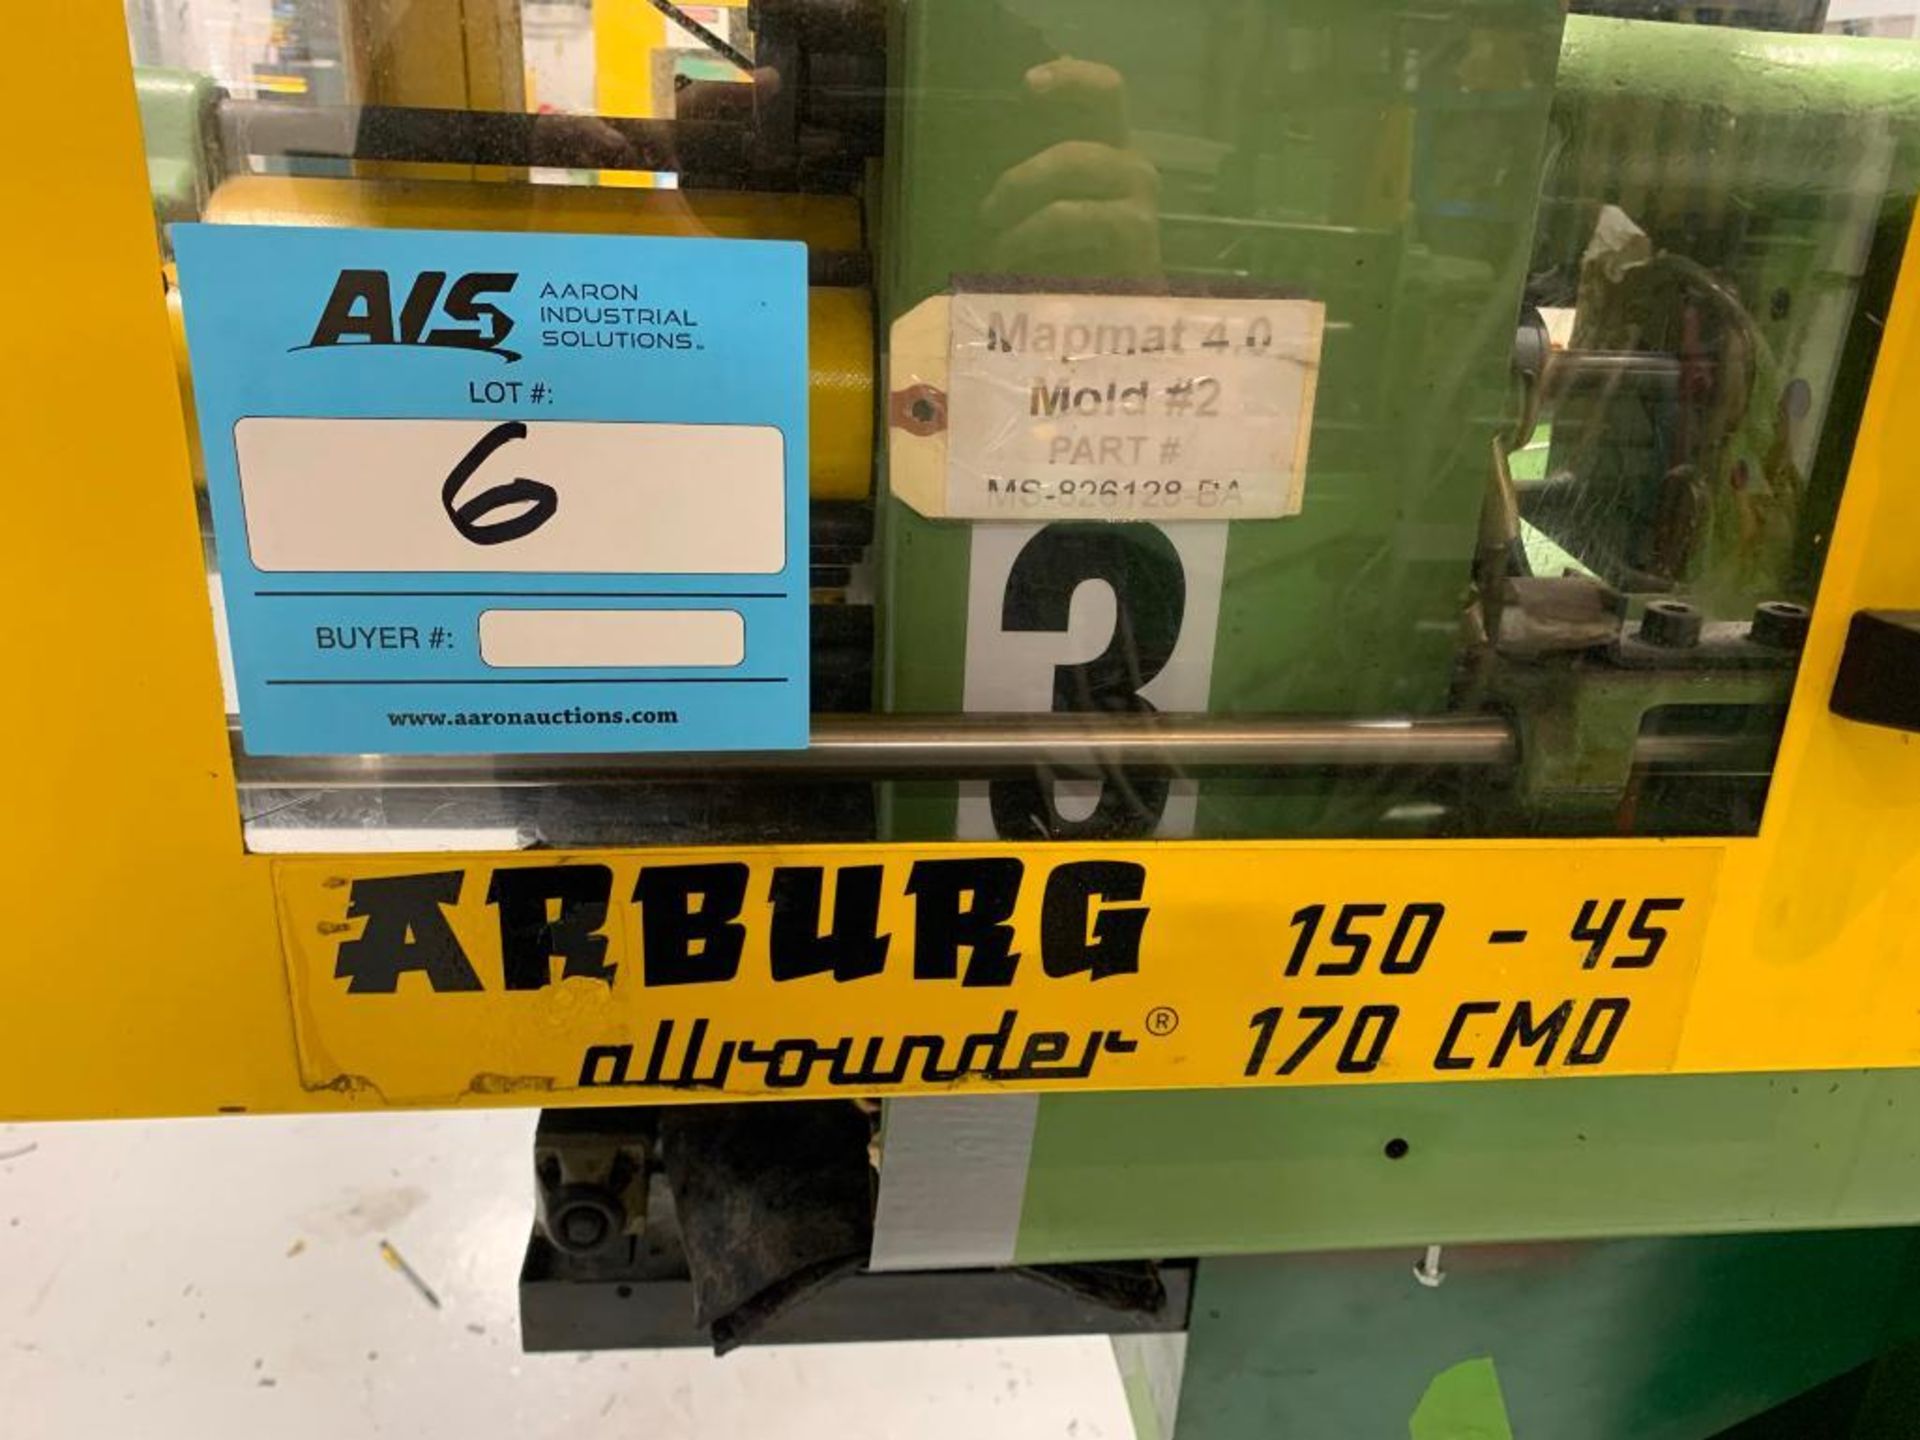 Arburg Allrounder Injection Molding Machine Model 170CMD 150-45 (1989) - Image 3 of 9